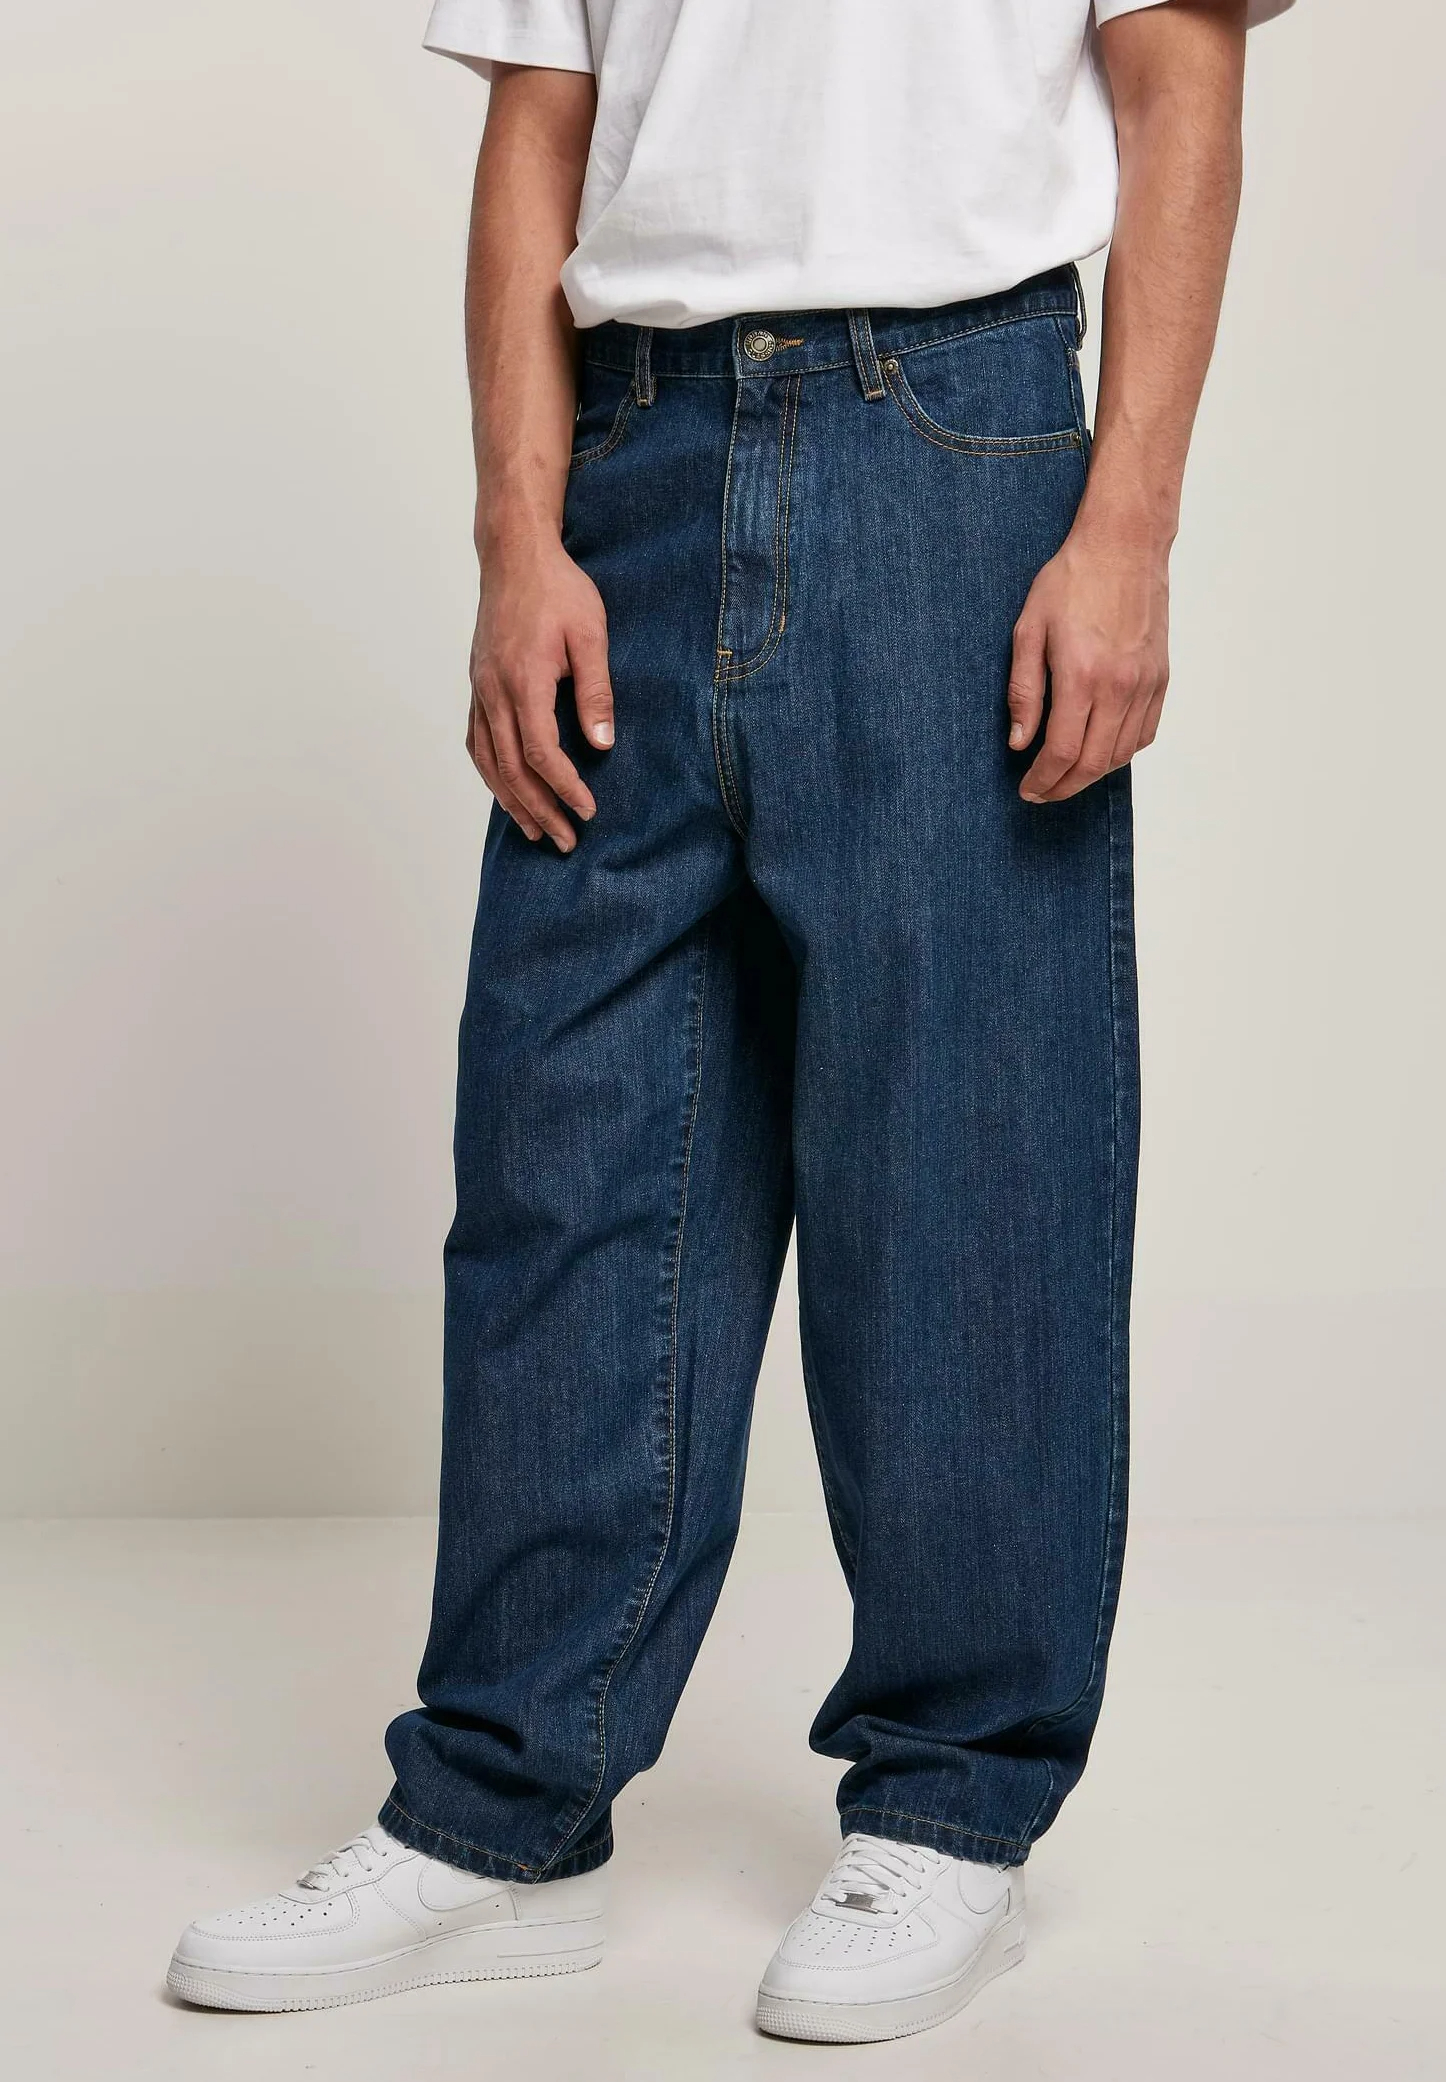 Urban jeans – the symbol of the stylish man插图4